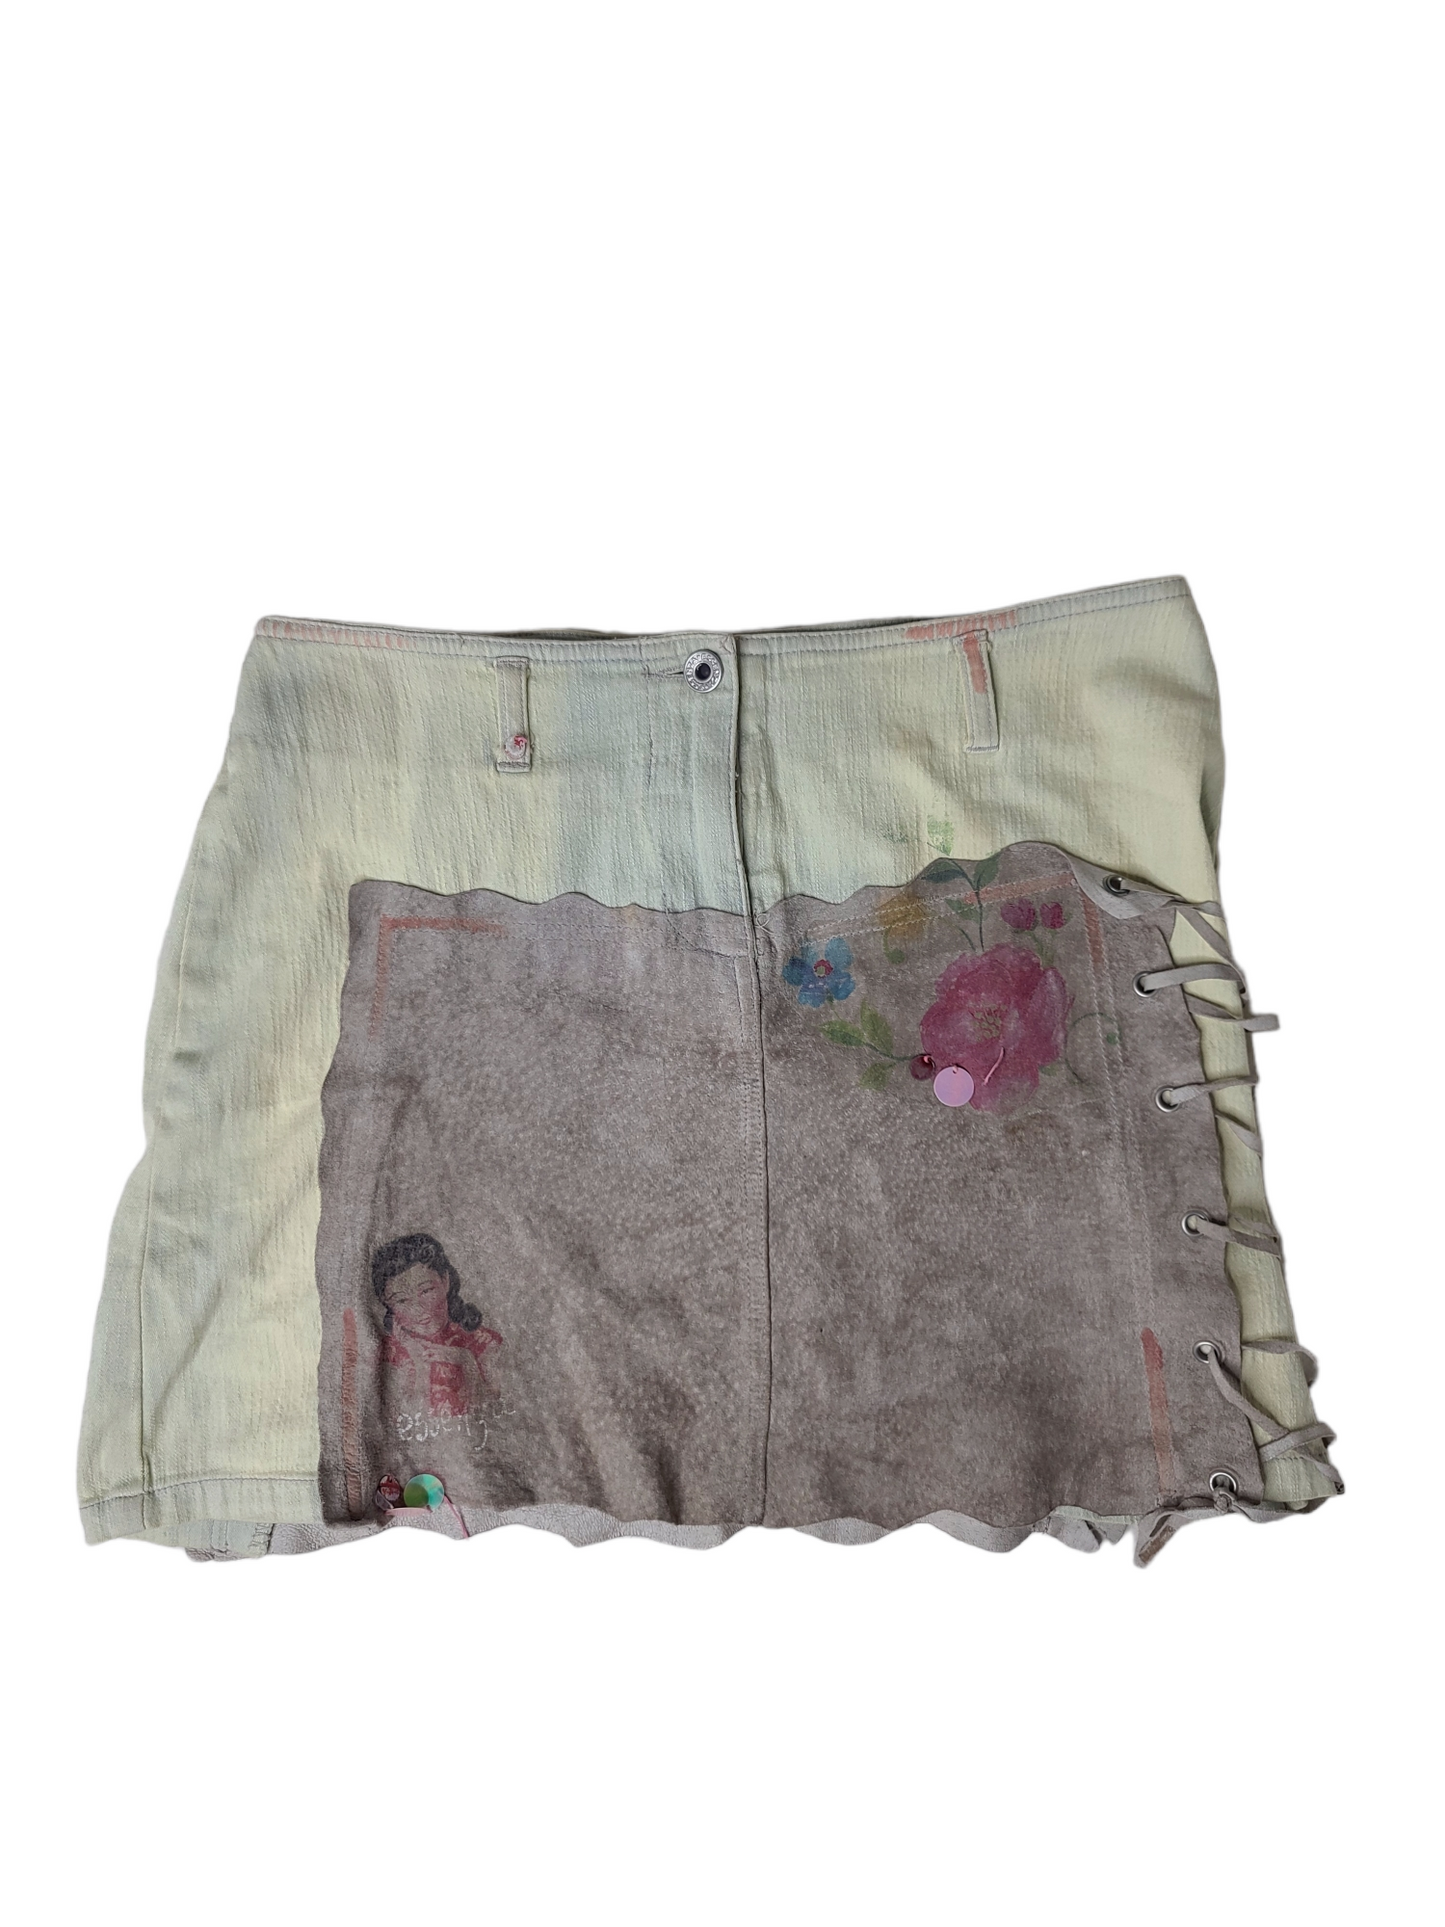 Maxi skirt jean archive fashion destroy rare grunge cyber cybergrunge bohemian fairygrunge vintage 90s y2k